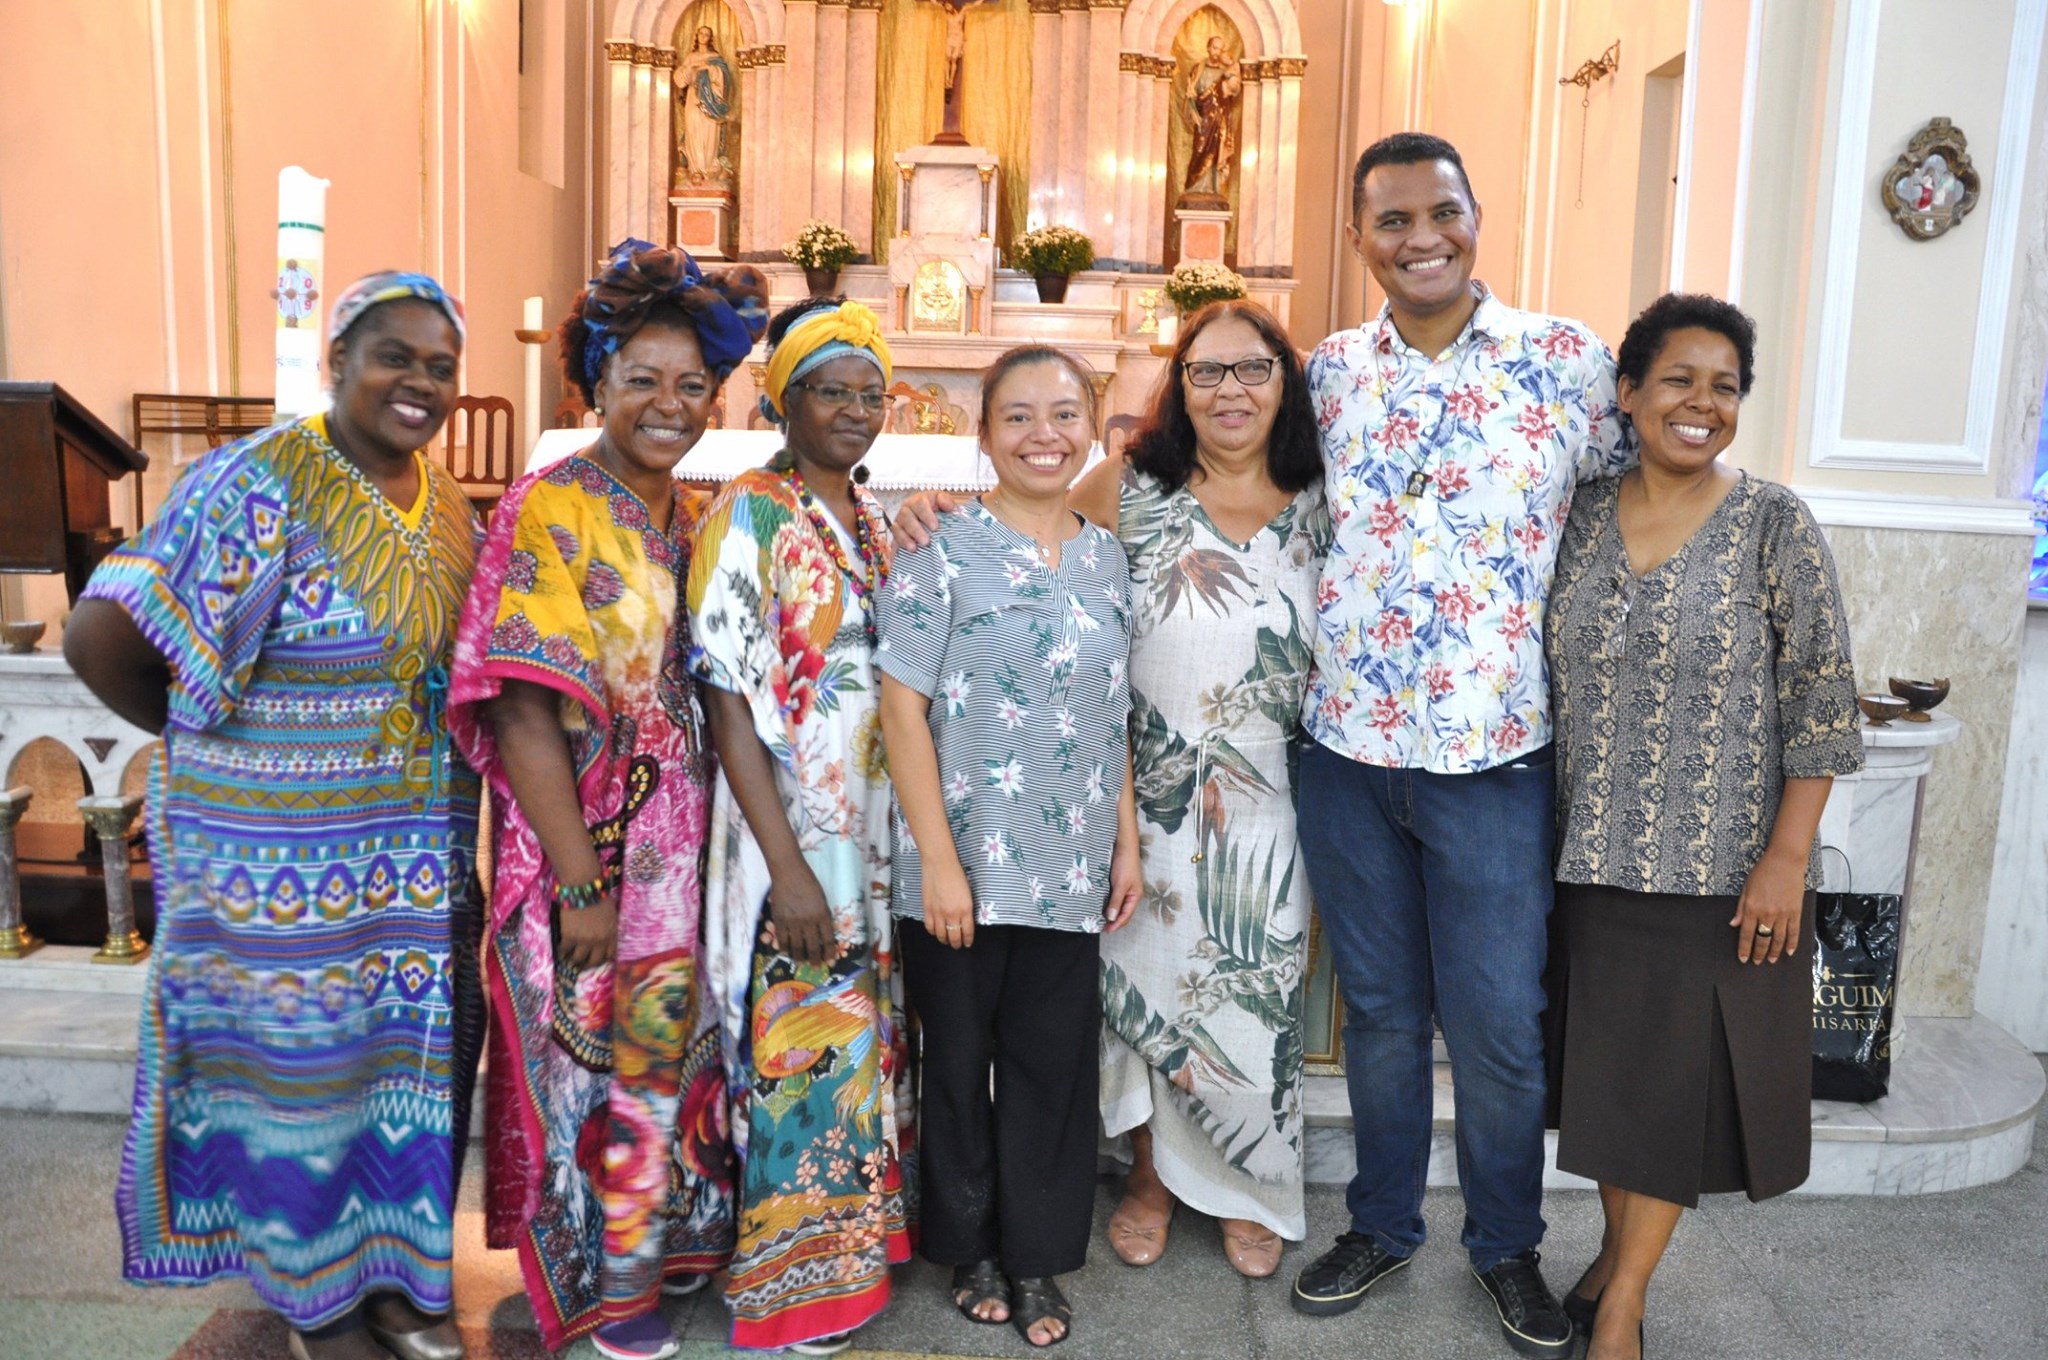 Sr. Ruperta Palacios Silva, far right, at the May 2019 farewell Mass at St. Anthony of Padua parish in Barra Mansa, Rio de Janeiro. (Courtesy of Ruperta Palacios Silva)